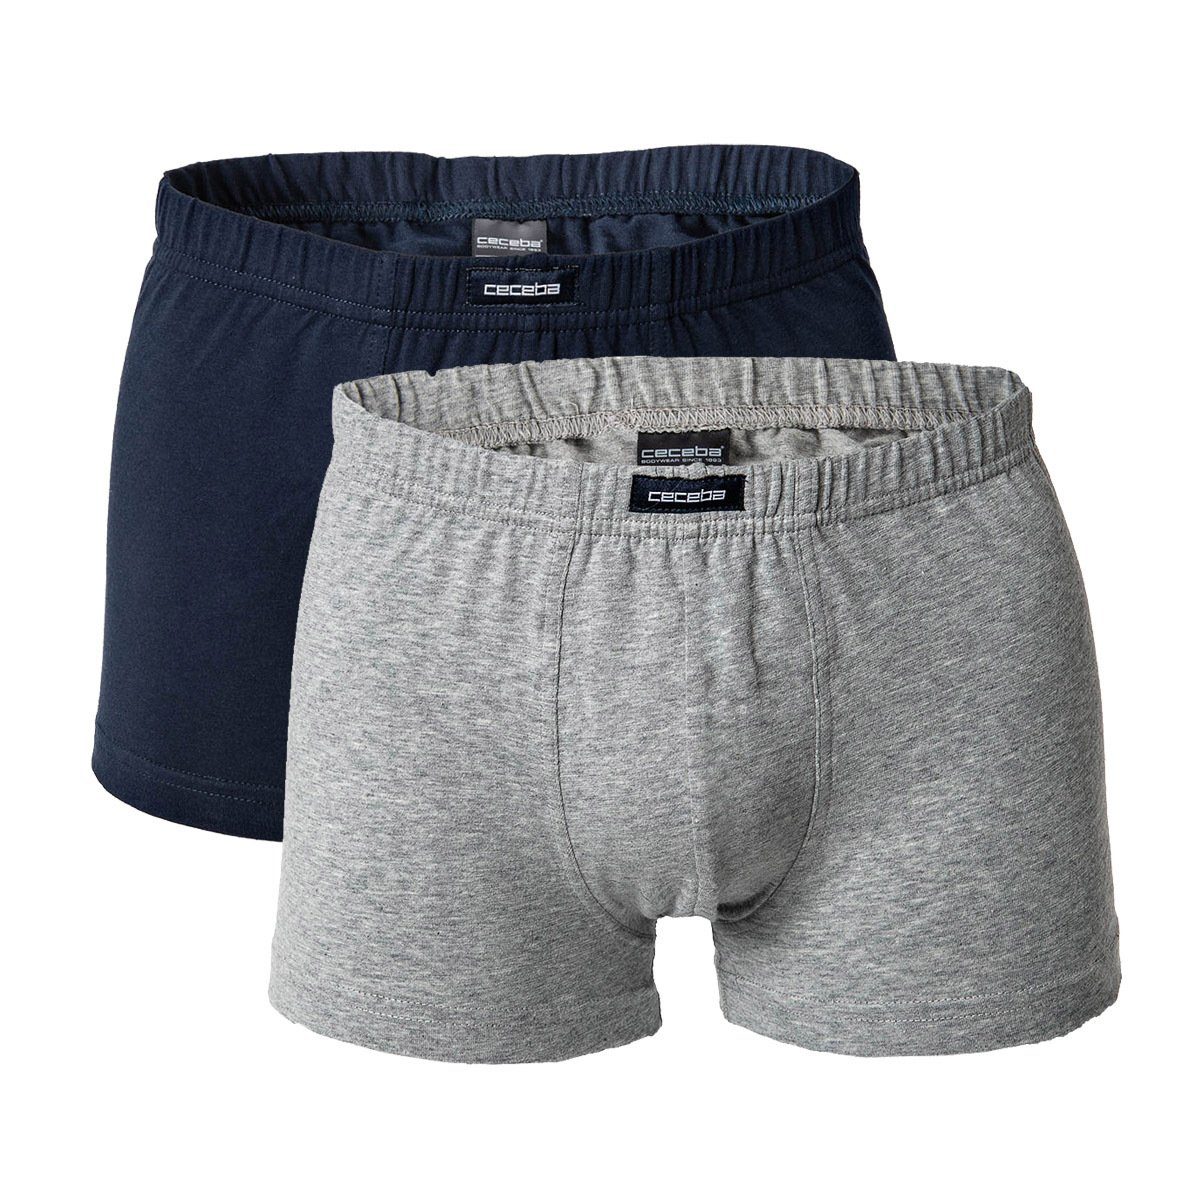 CECEBA Boxer Herren Shorts, 2er Pack - Short Pants, Basic Grau